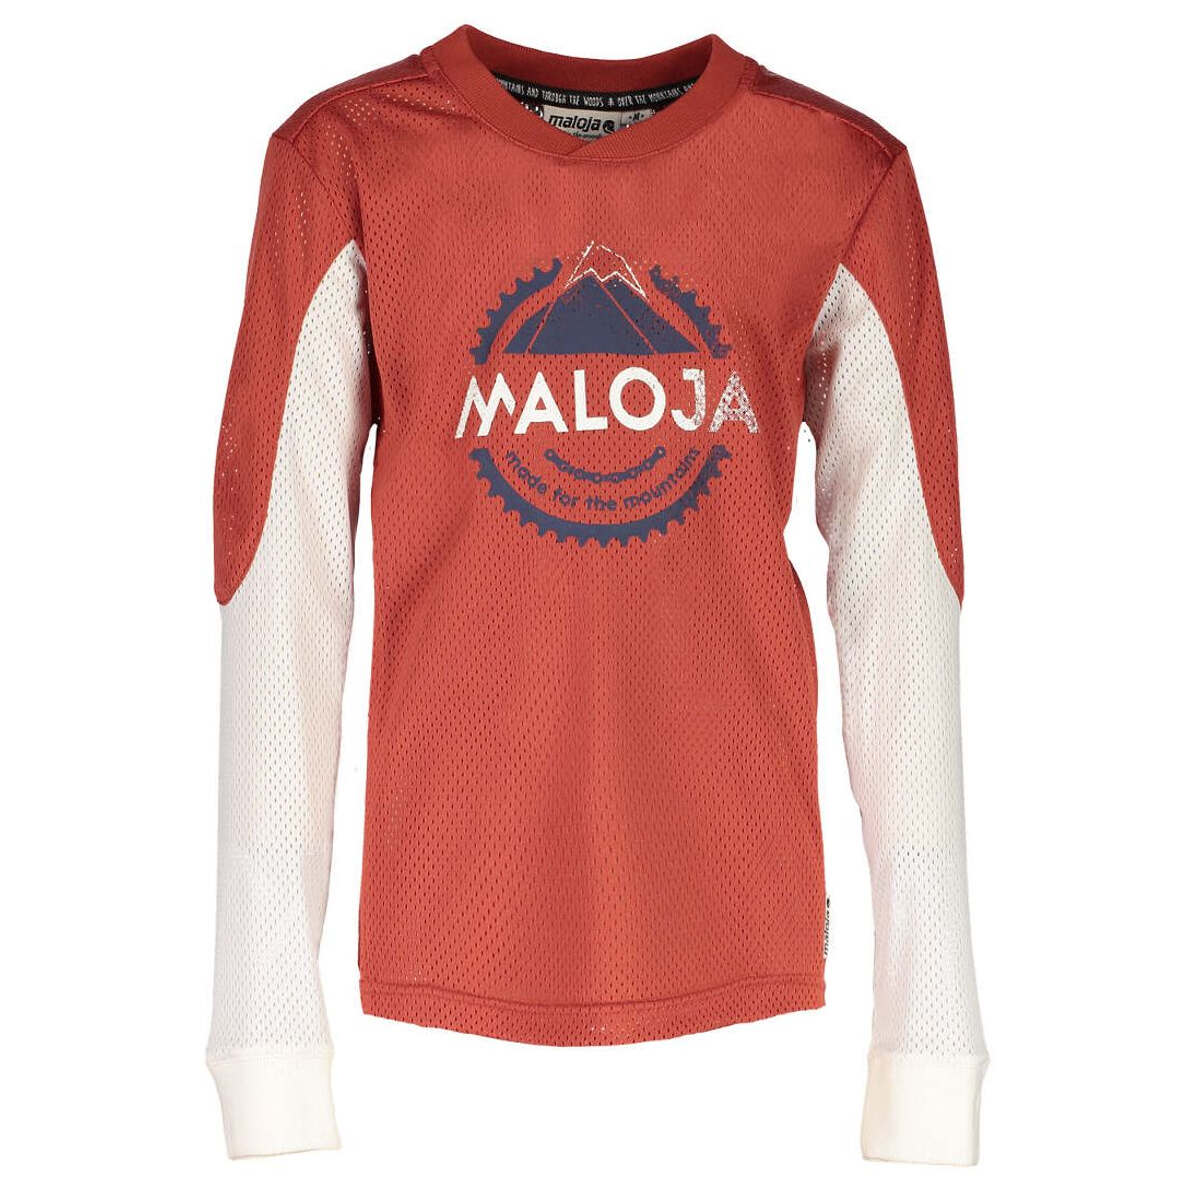 Maloja Kids Downhill Jersey Long Sleeve RicoU. Maple Leaf